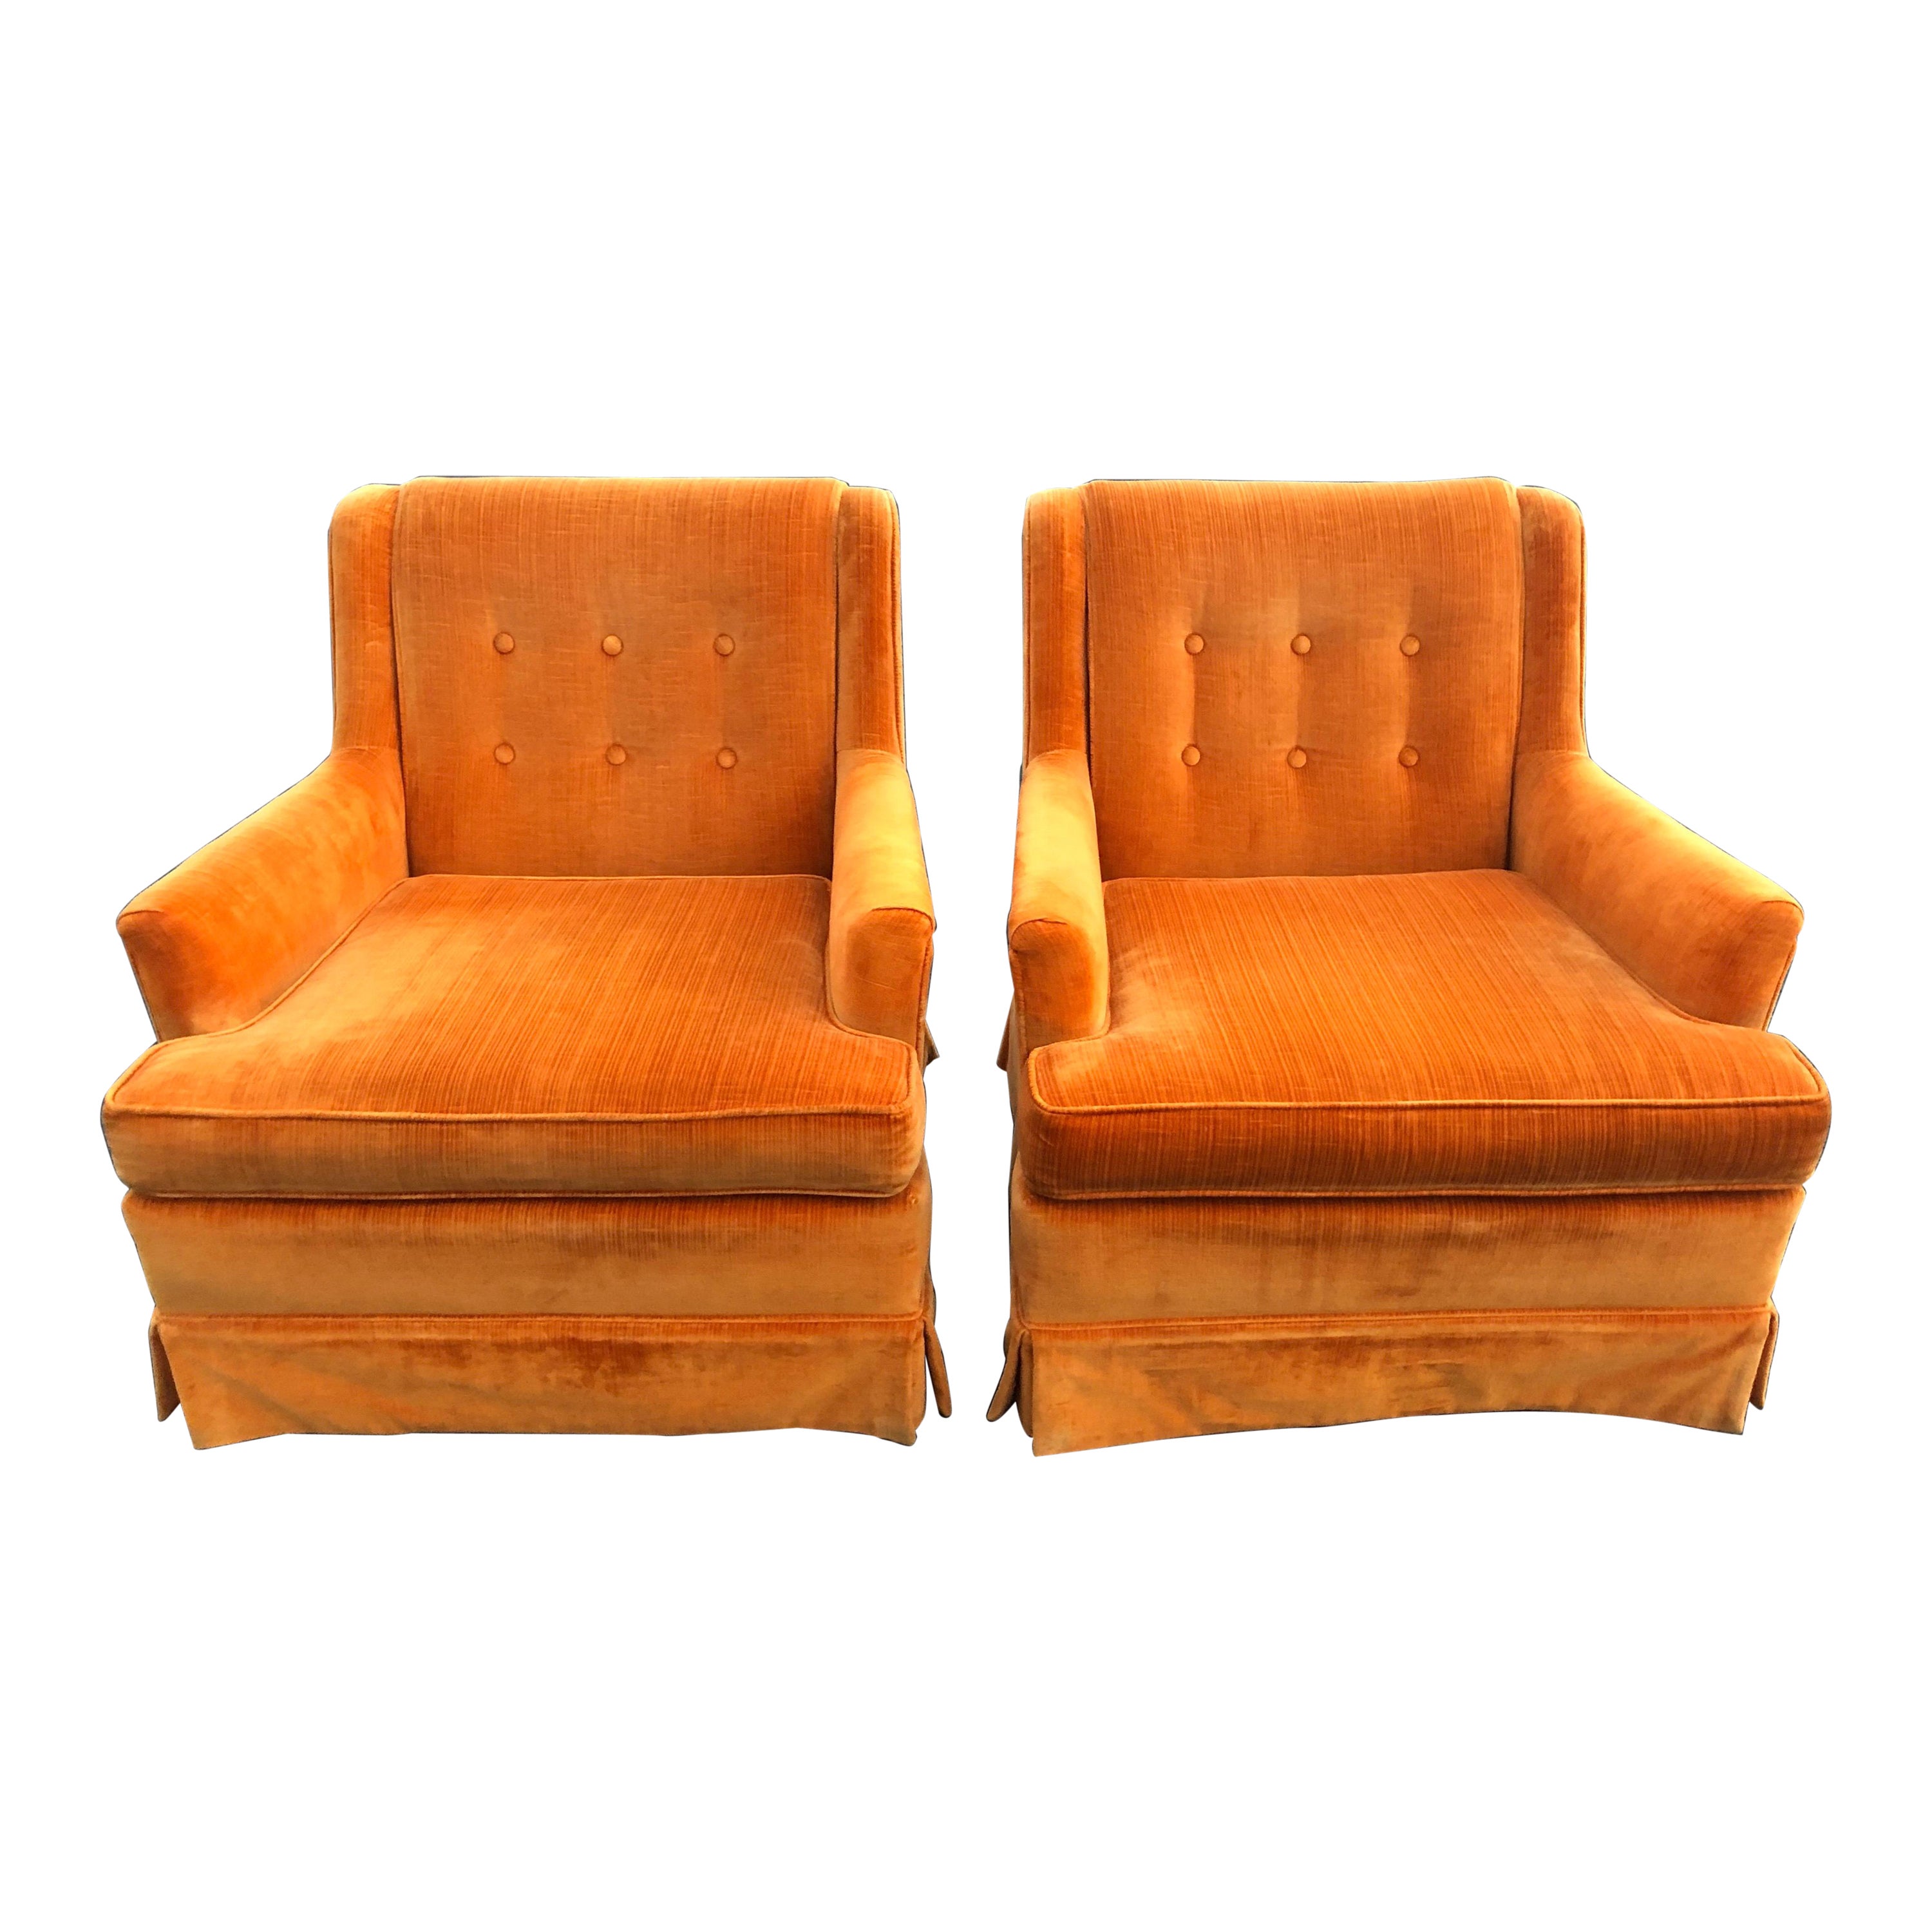 Pair of Orange Velvet Chairs by Woodmark Originals